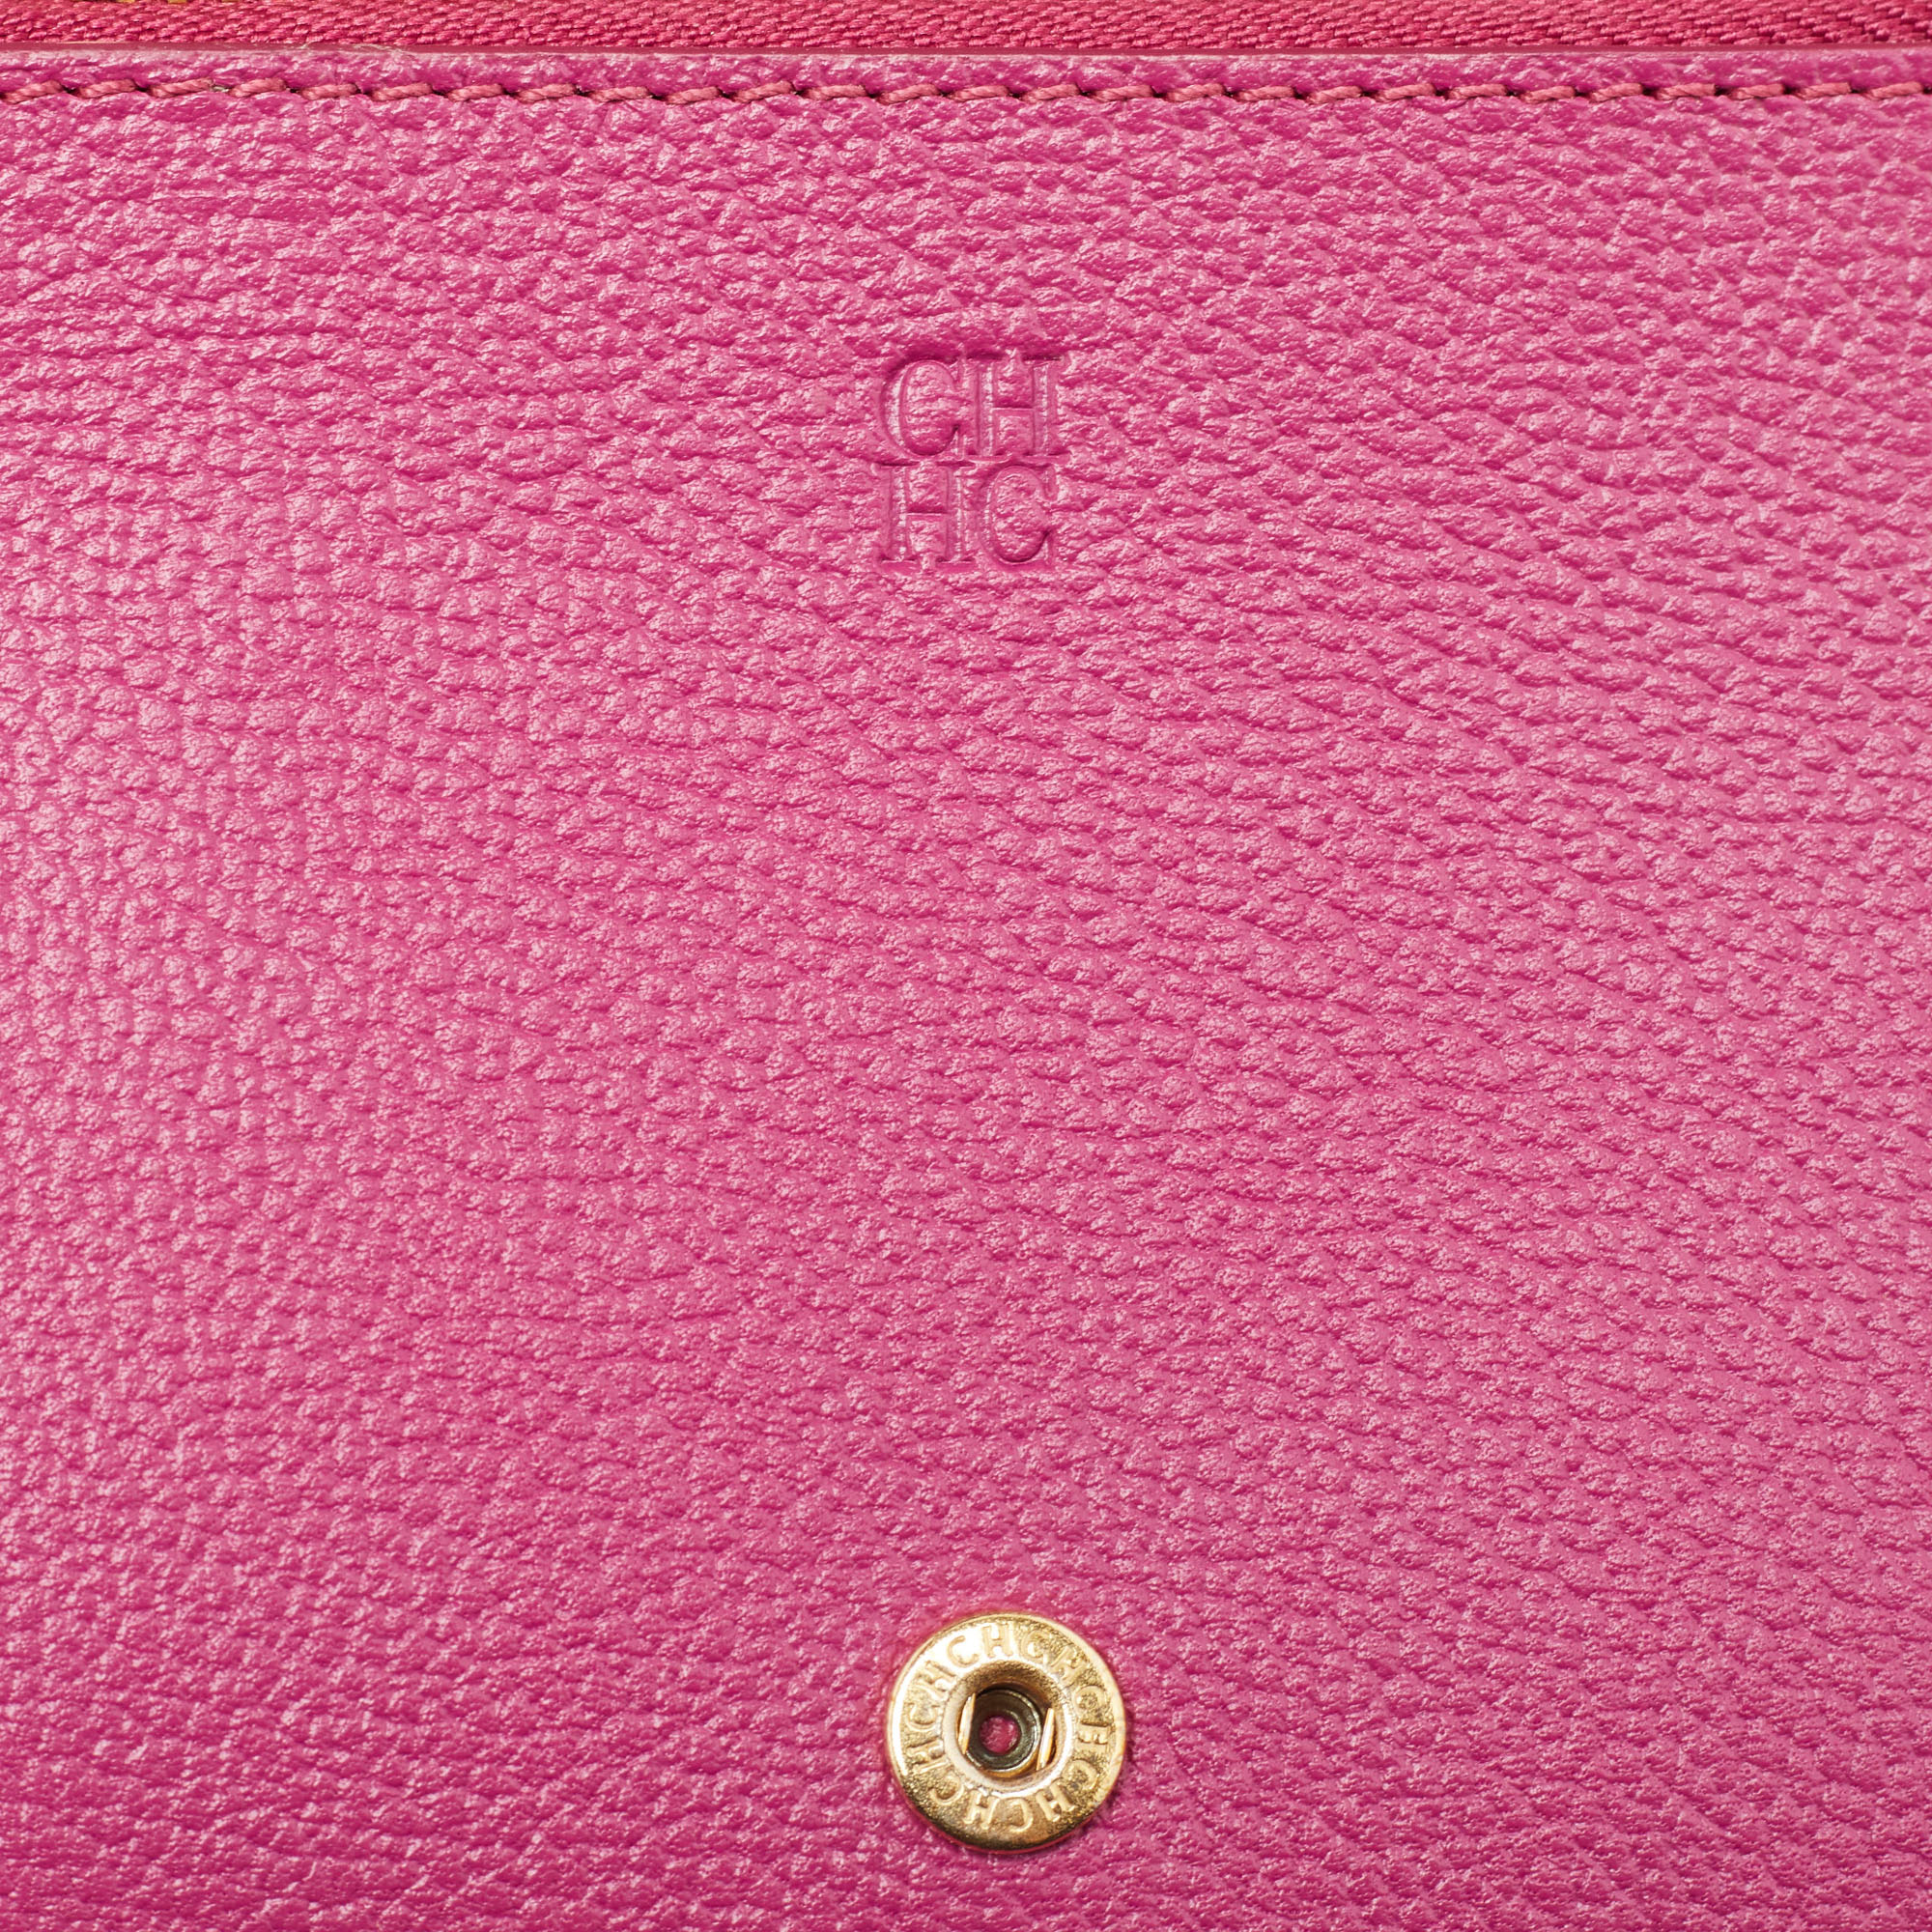 CH Carolina Herrera Magenta Monogram Leather Compact Wallet